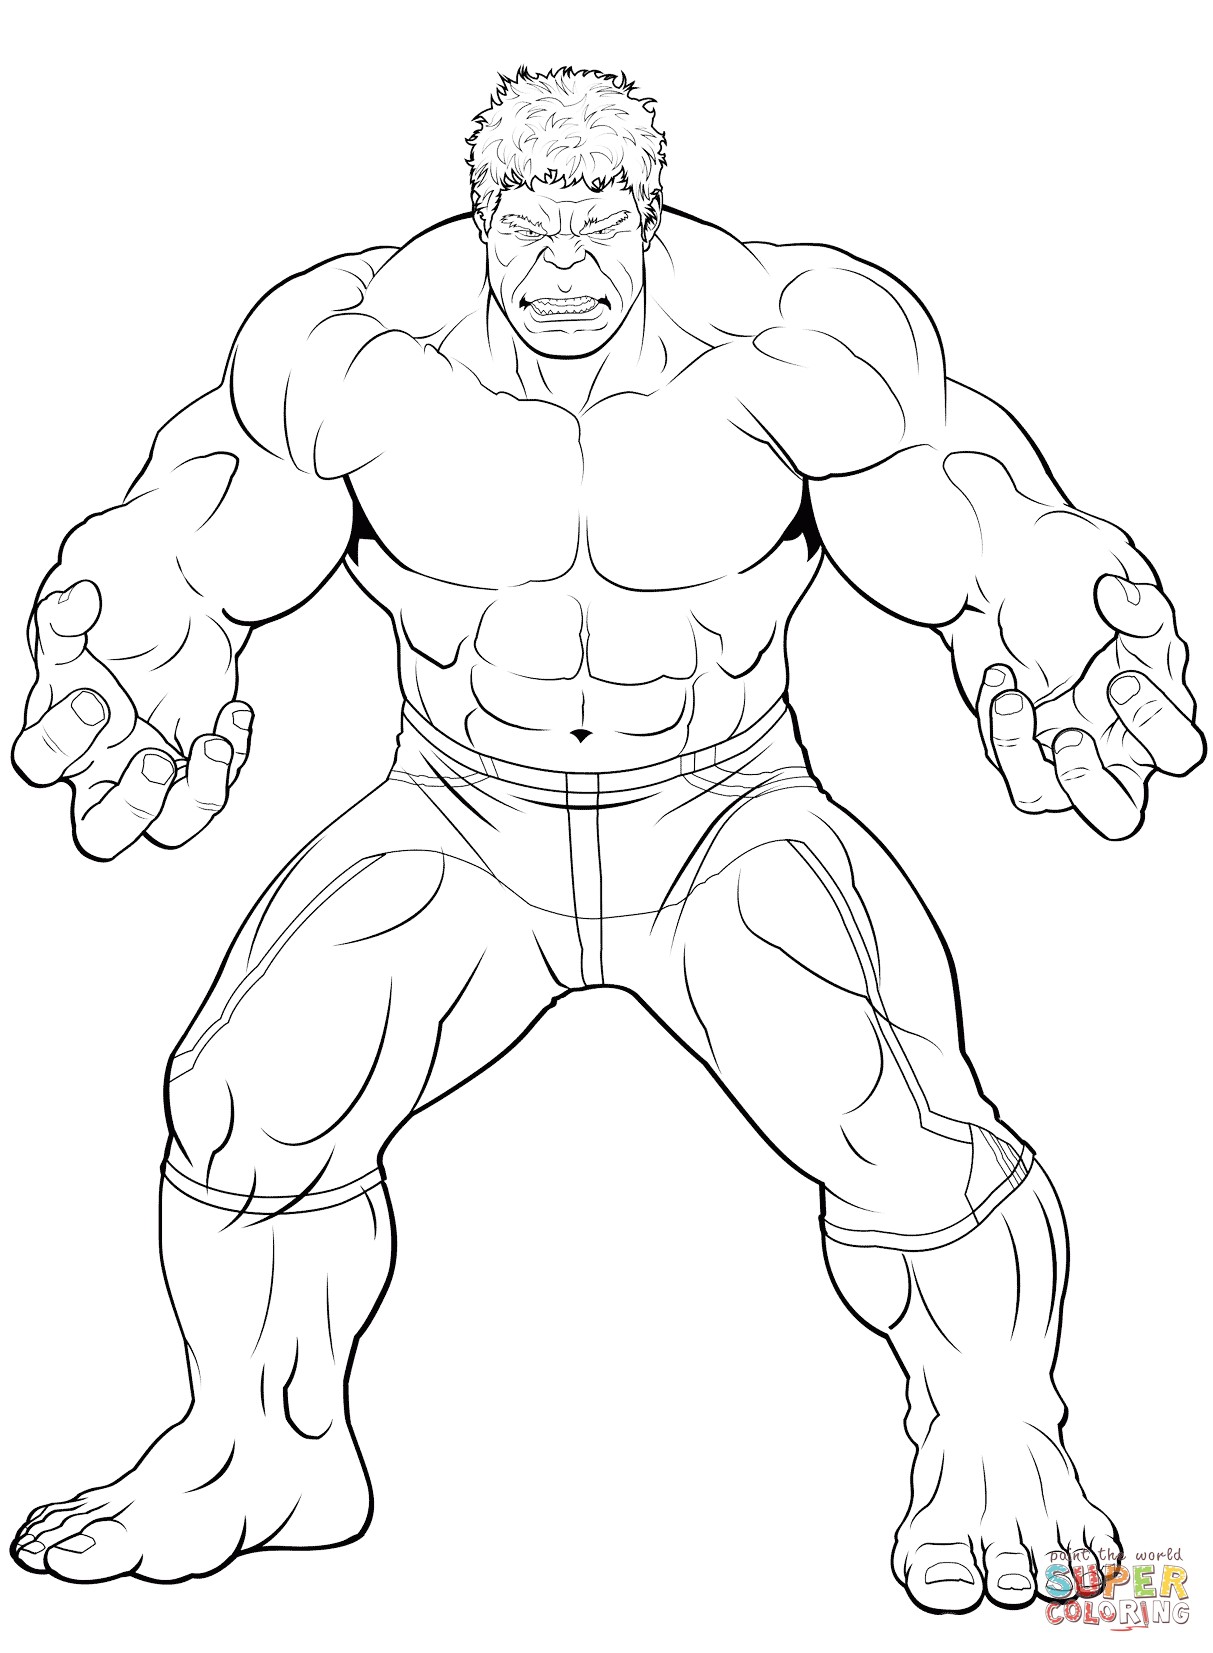 Incredible Hulk Coloring Pages at Free printable